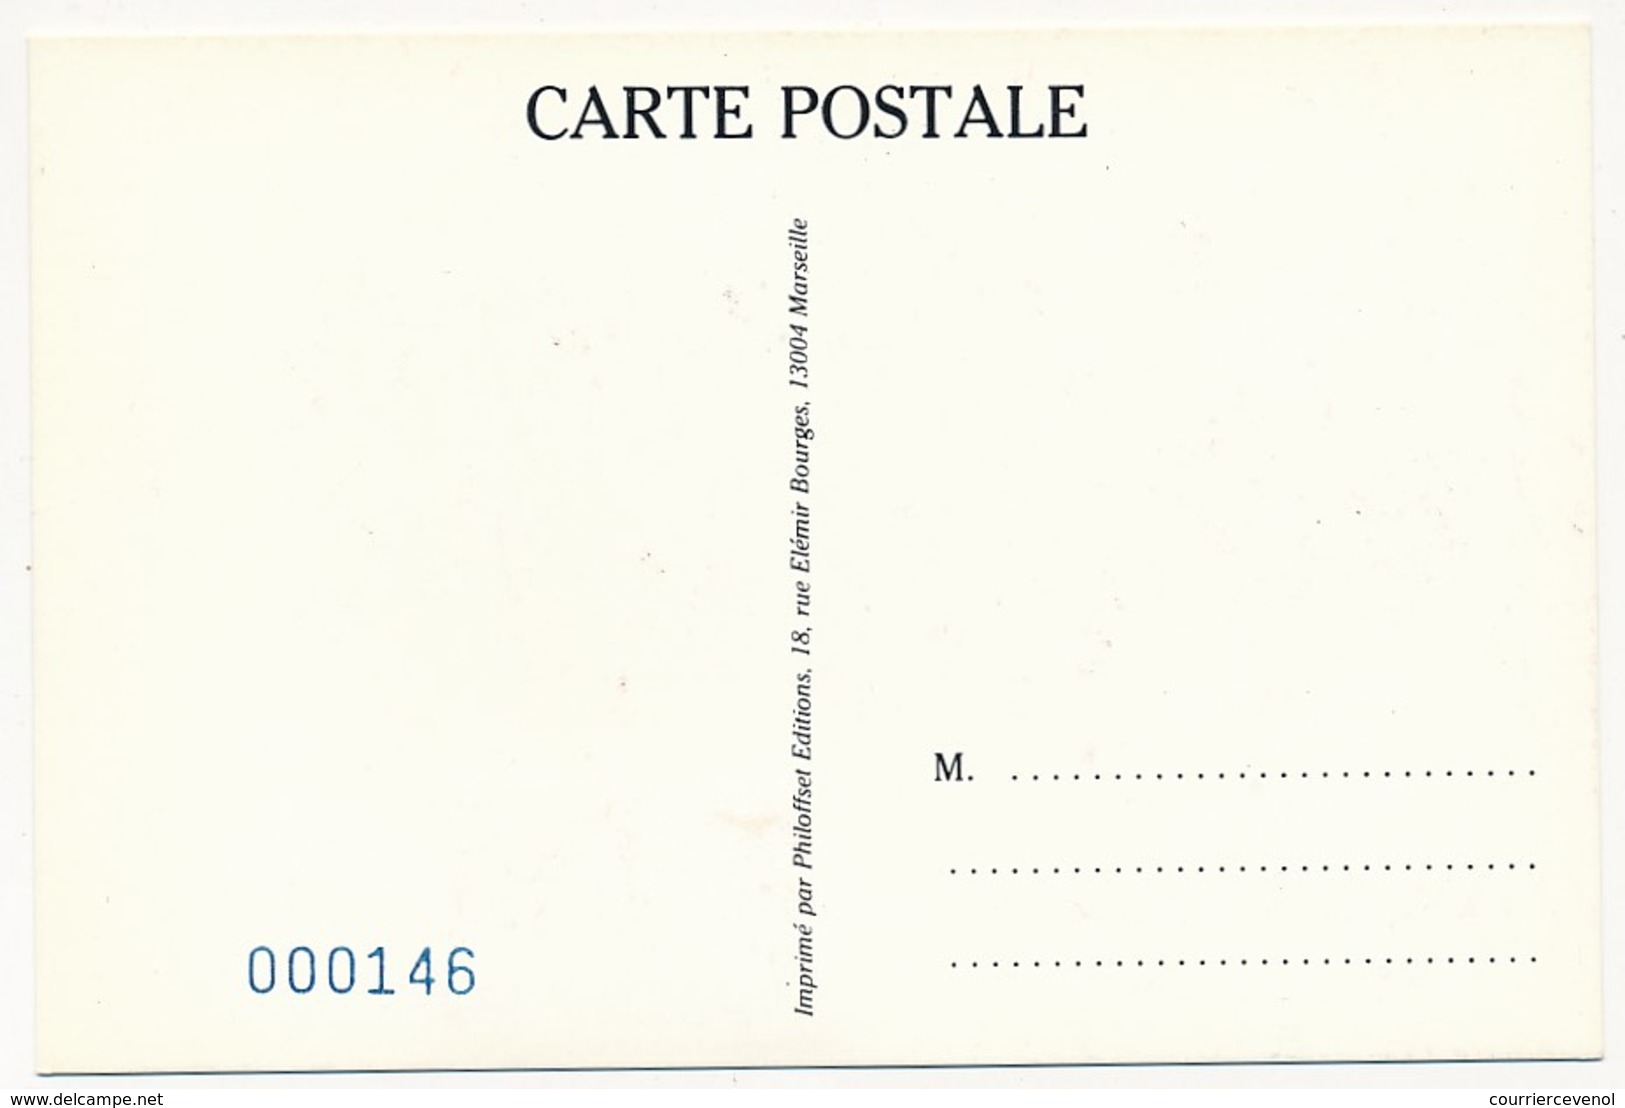 FRANCE => Carte Postale + 1,80F Marseille - Inauguration De La Gare St Charles - 1983 Signée BRUNA Dessinateur Carte - Eisenbahnen